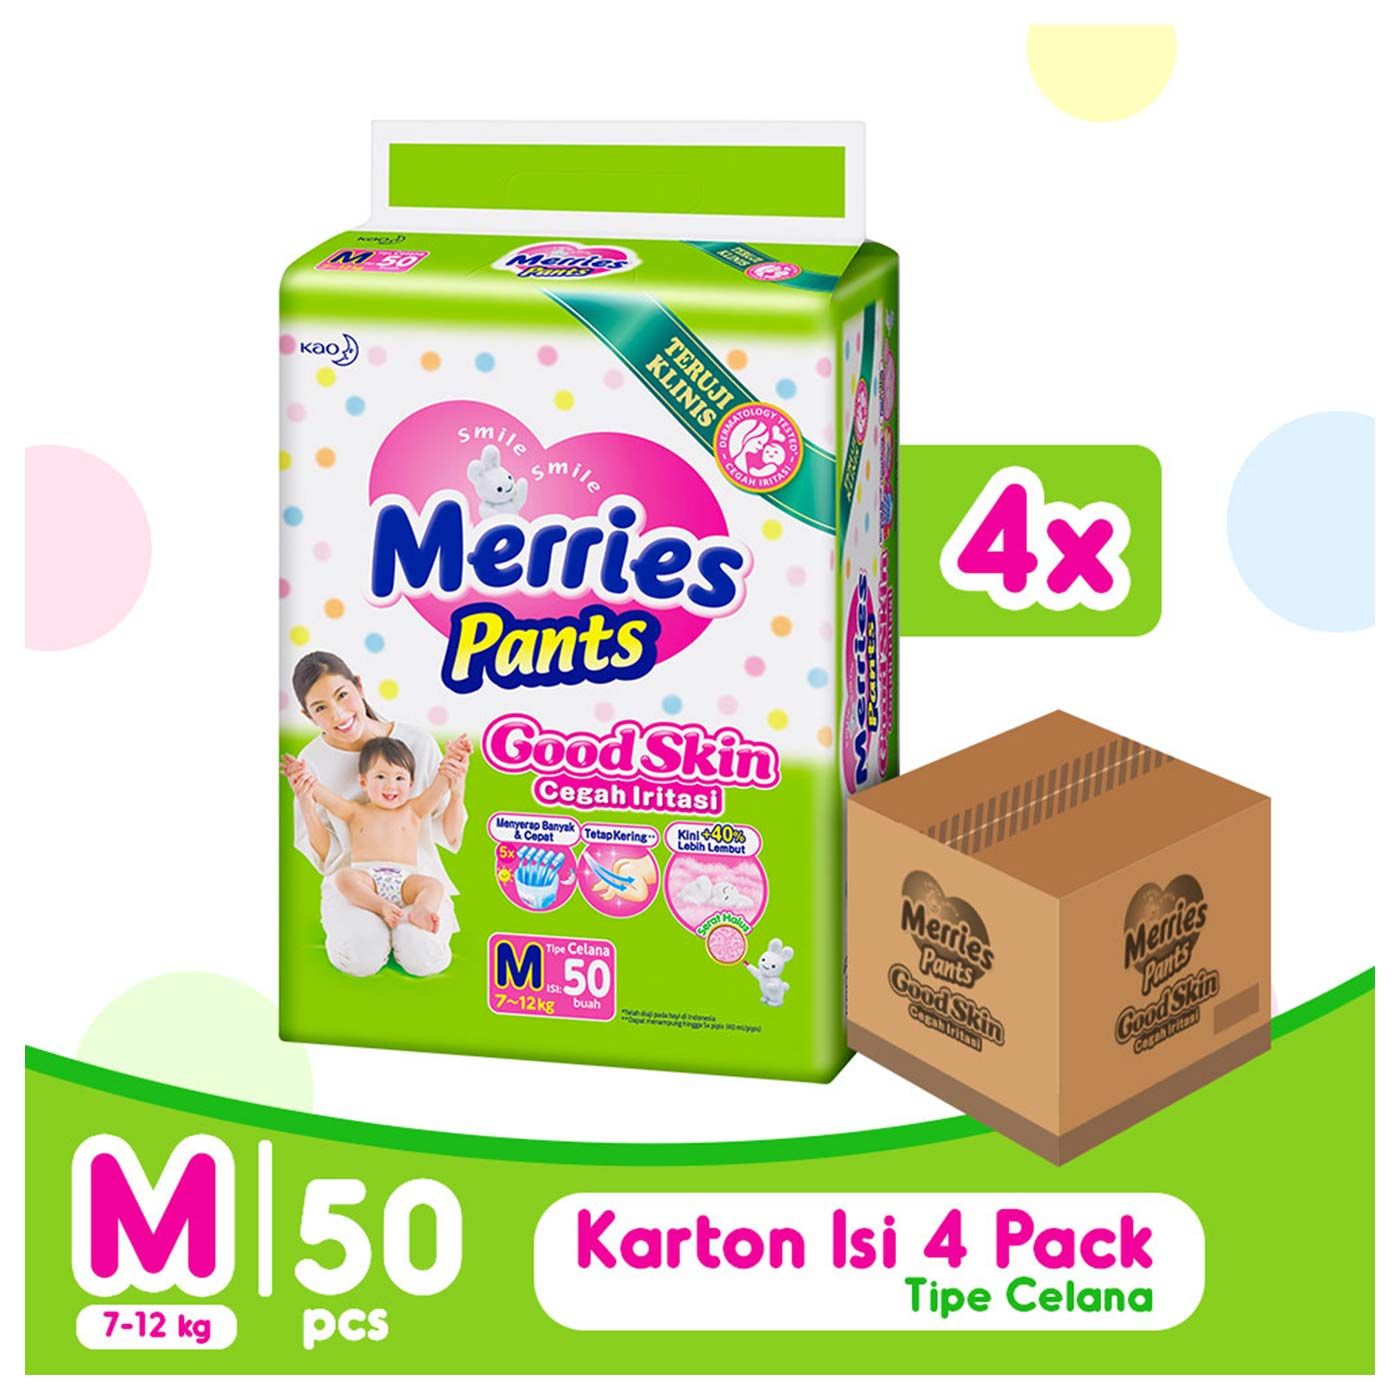 Merries Pants Good Skin M50- Karton - 1